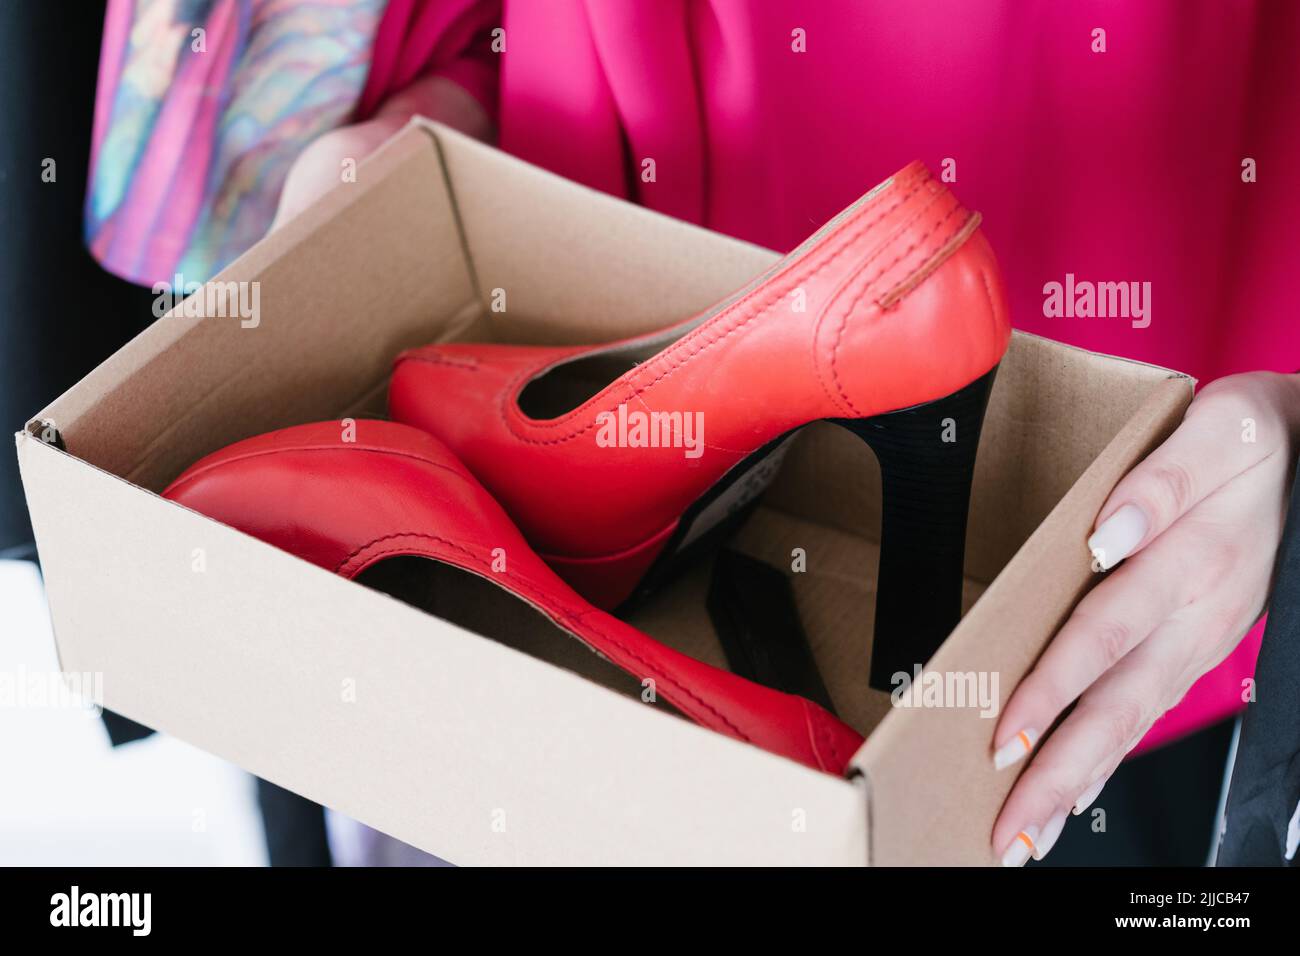 fashion footwear shopping red high heel shoes box Stock Photo